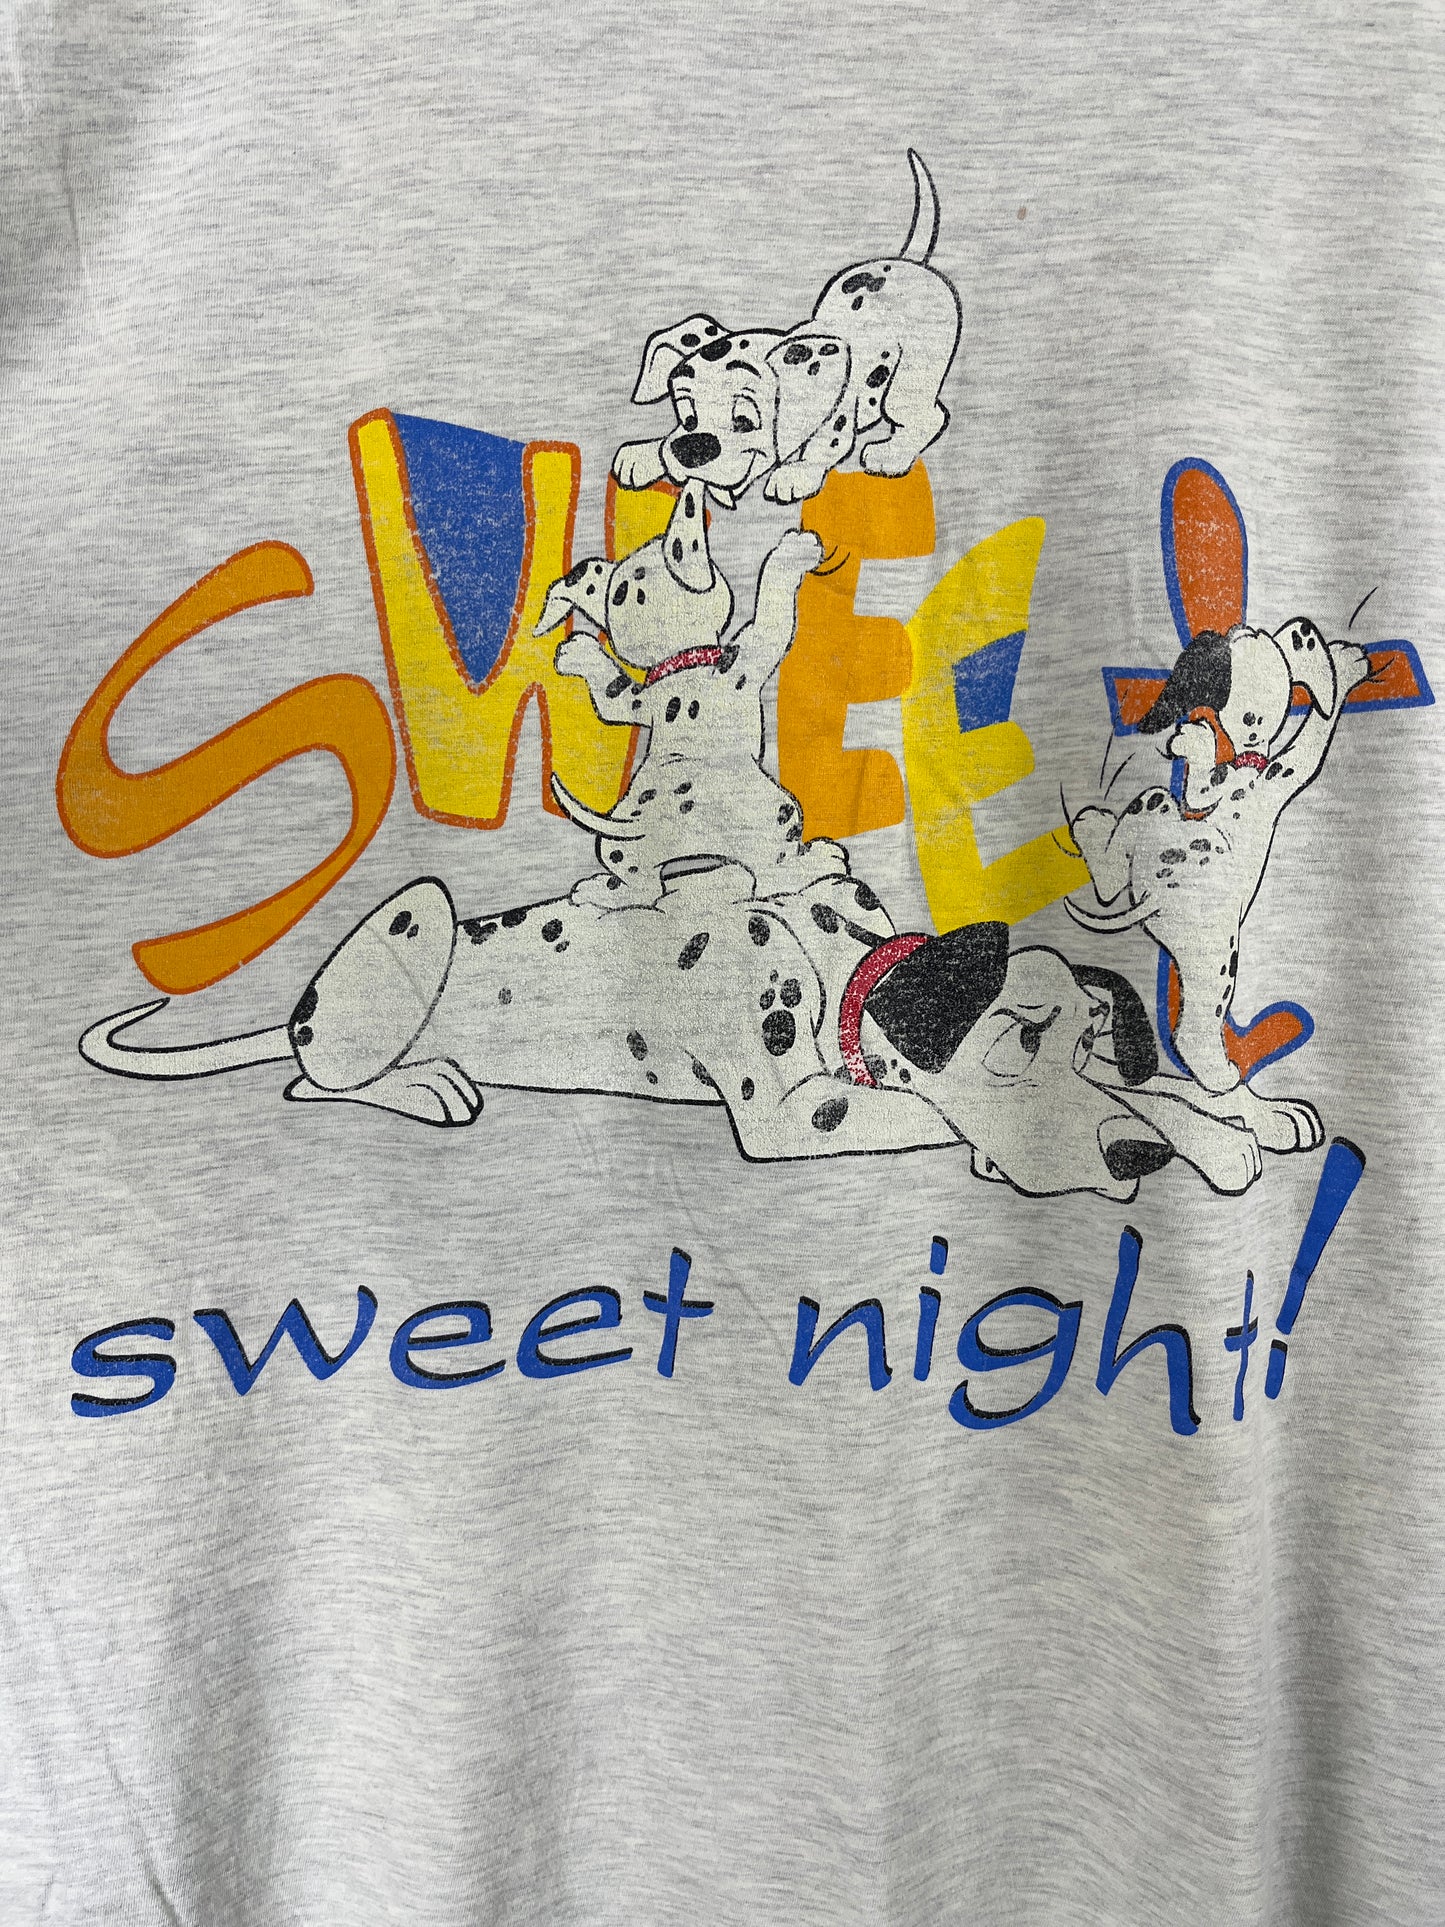 Vintage 101 Dalmatians 90s "Sweet Night!" T-shirt